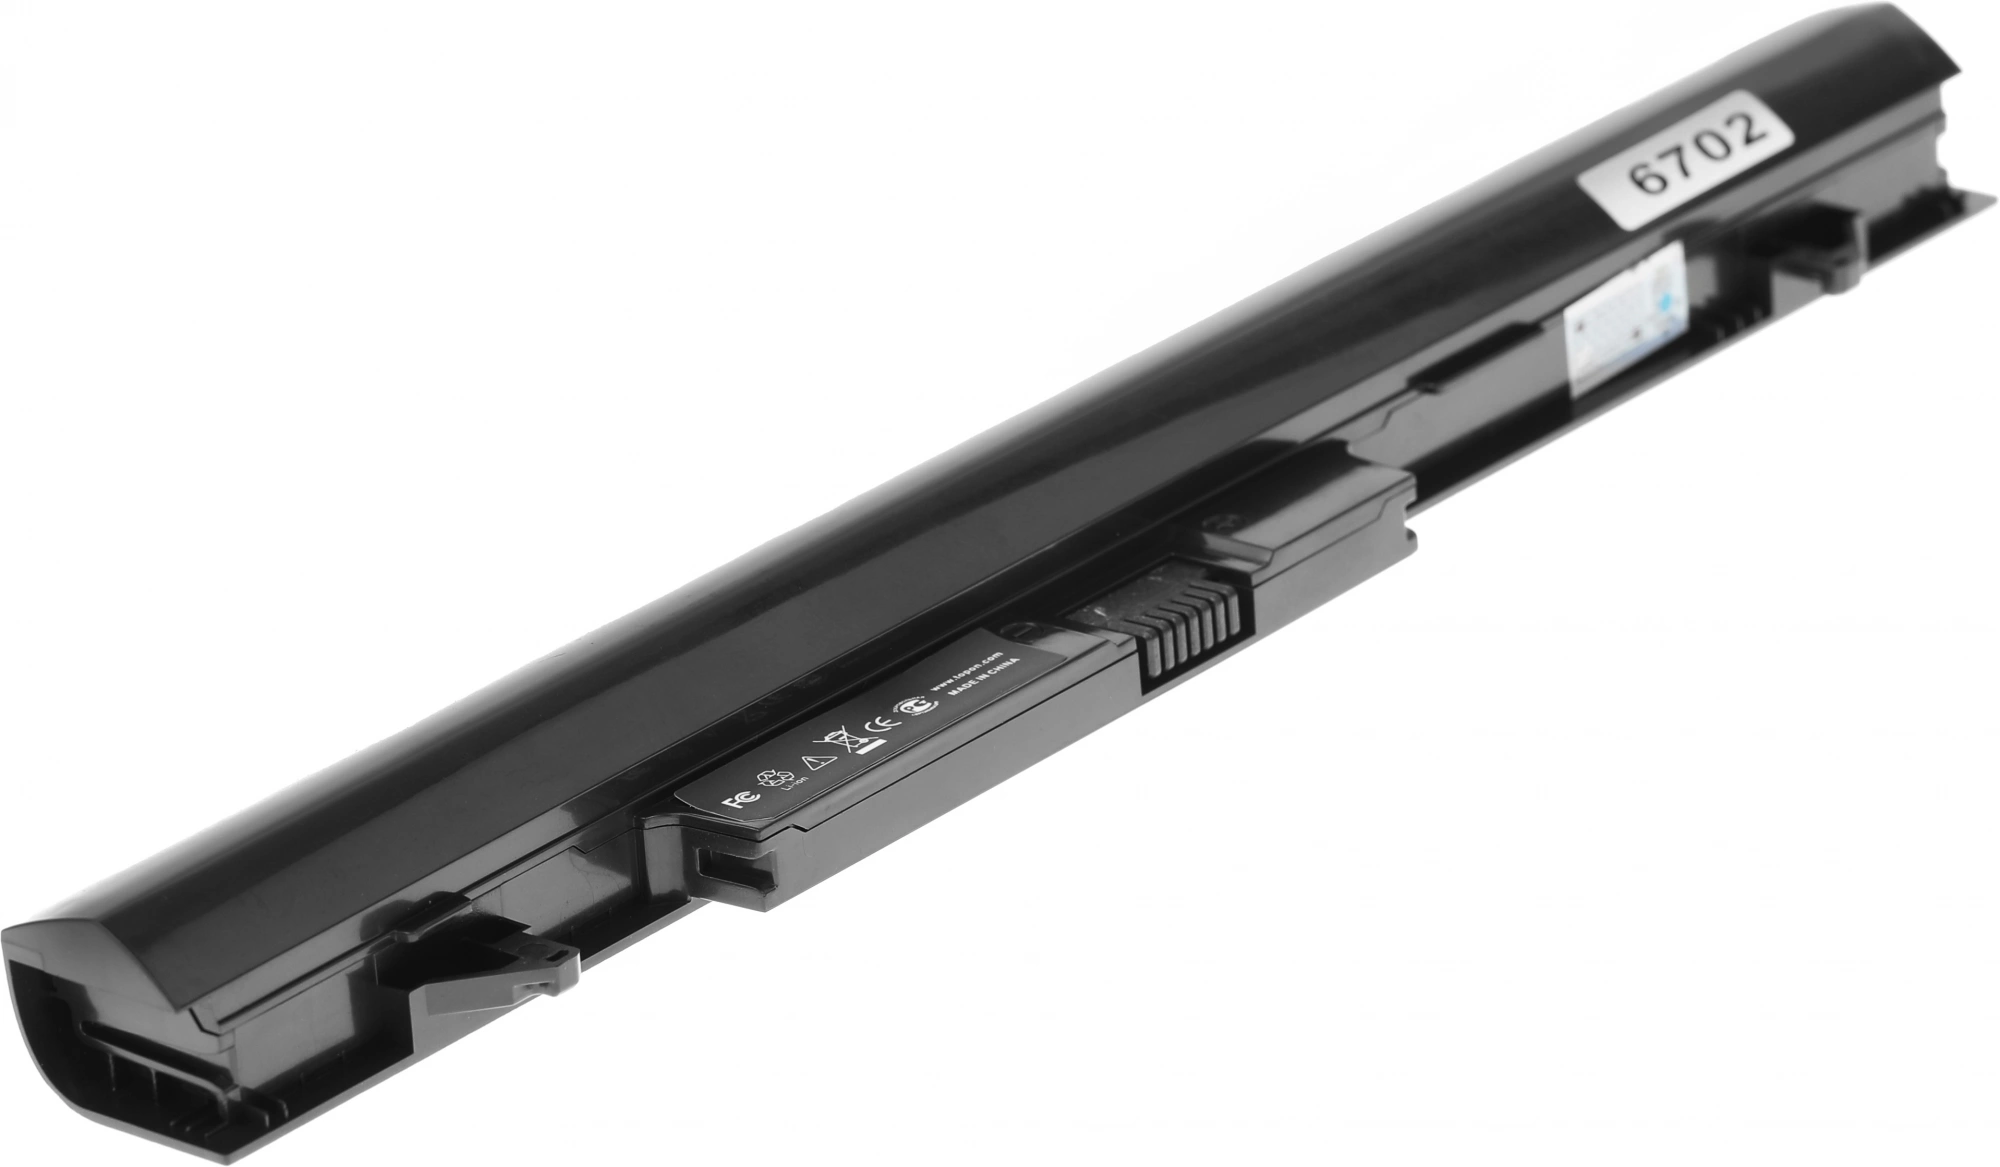 Батарея для ноутбука TopON TOP-RA04 14.8V 2200mAh литиево-ионная